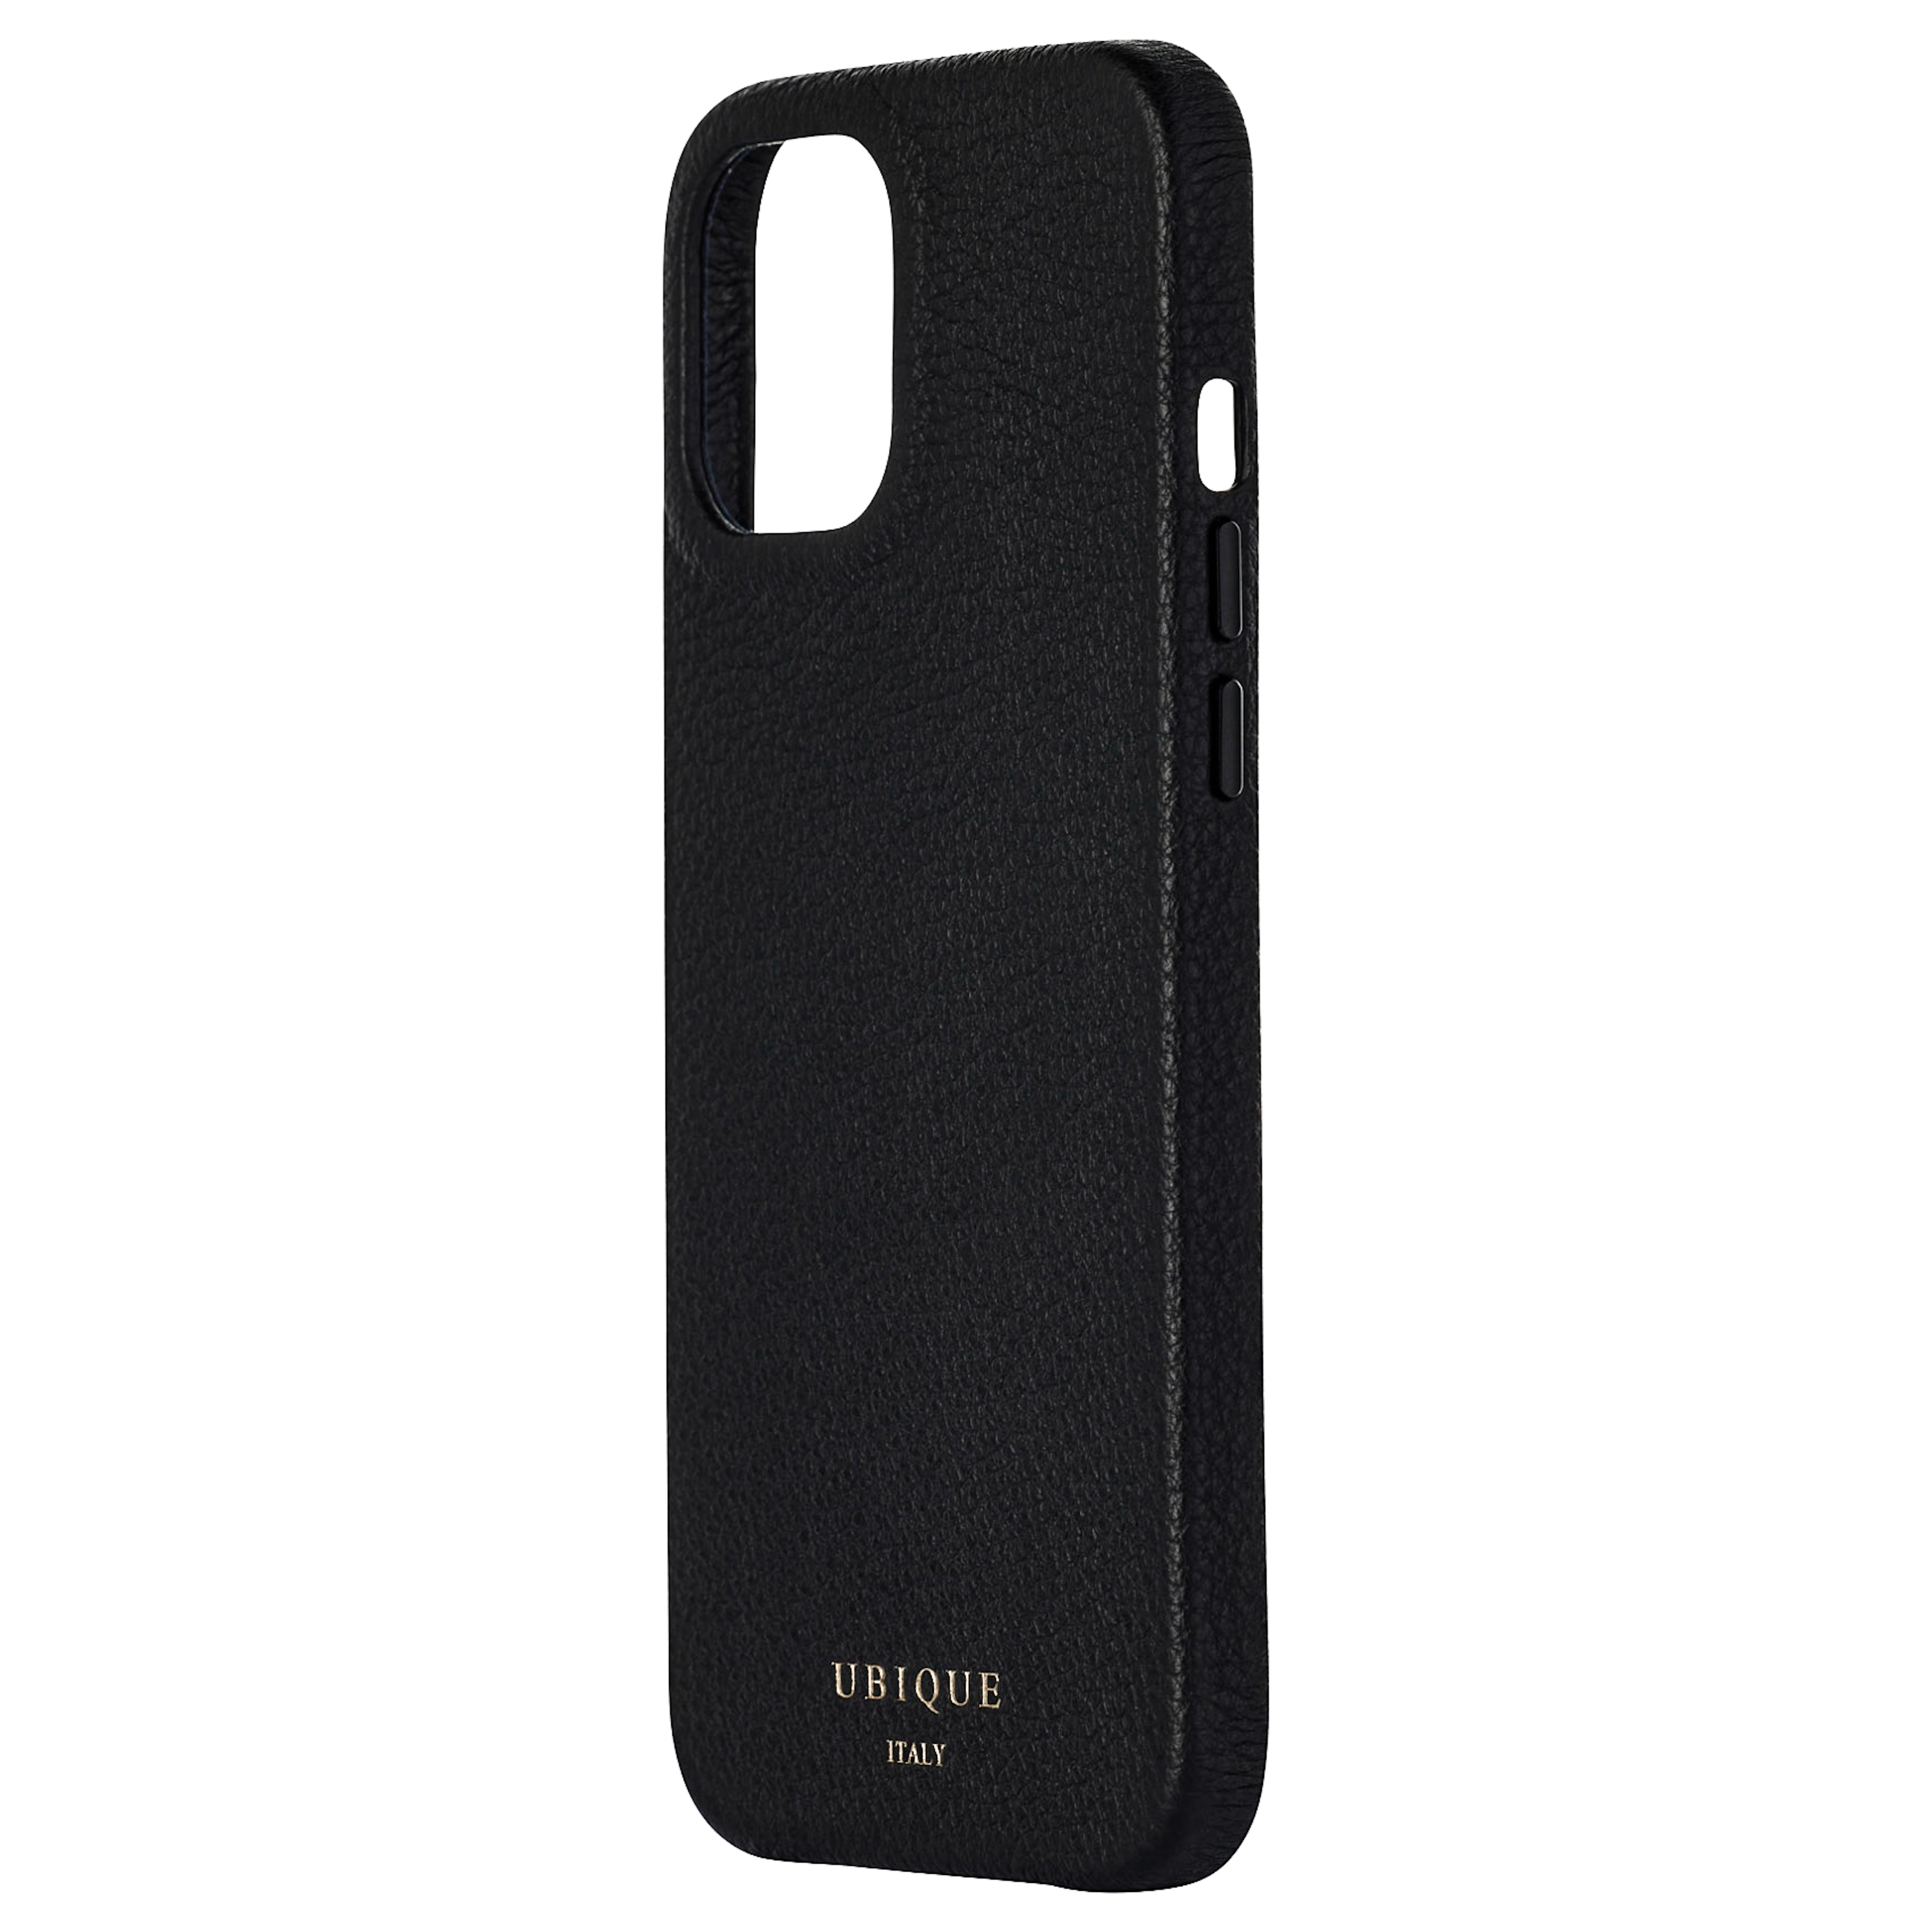 Ubique Italy Luxury iPhone Case 12 Pro Max Pebble Grain Leather Black Angled